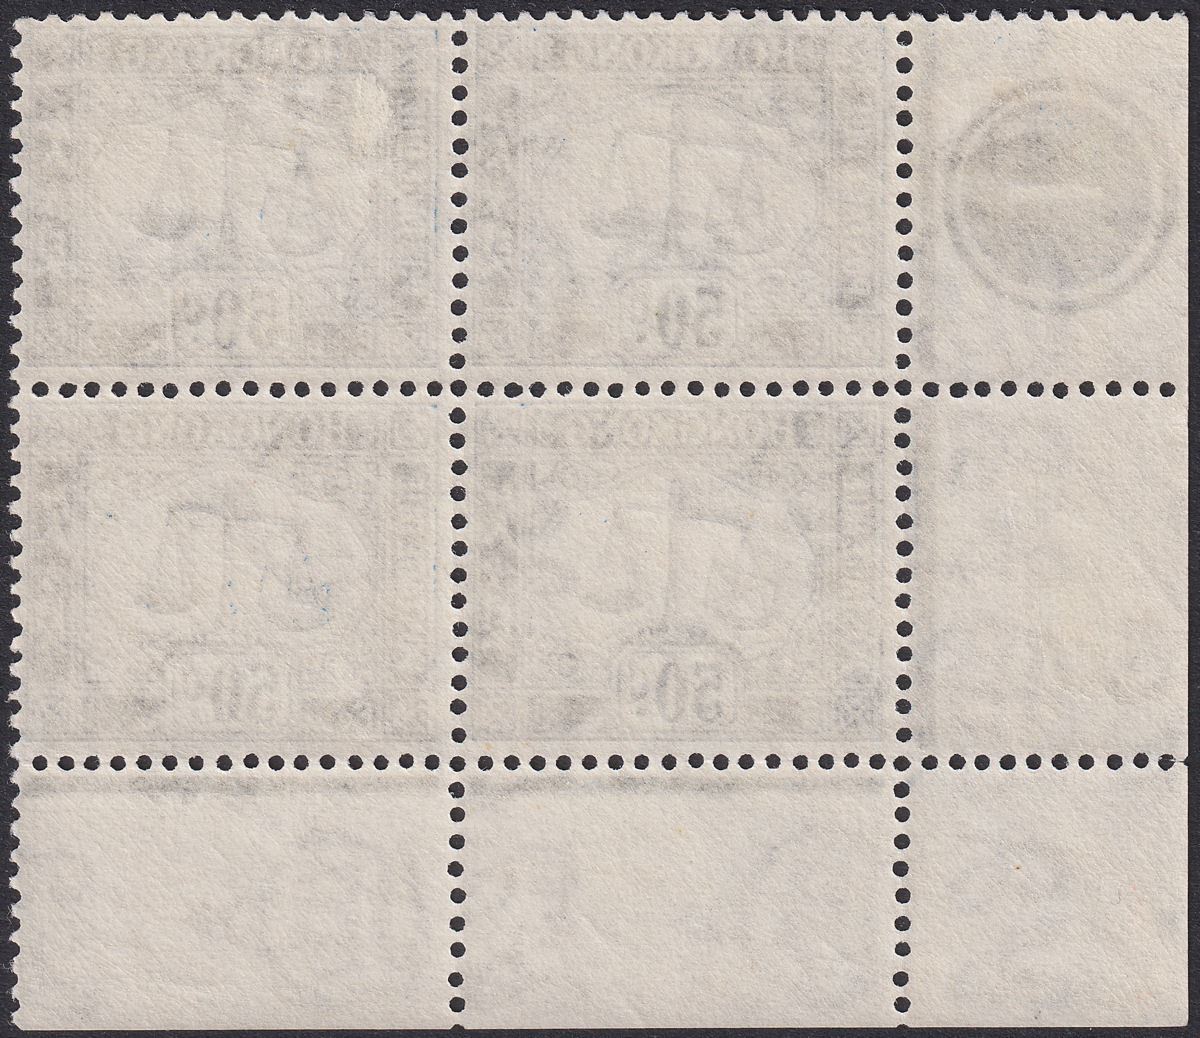 Hong Kong 1947 KGVI Postage Due 50c Blue Mint Corner Block SG D12